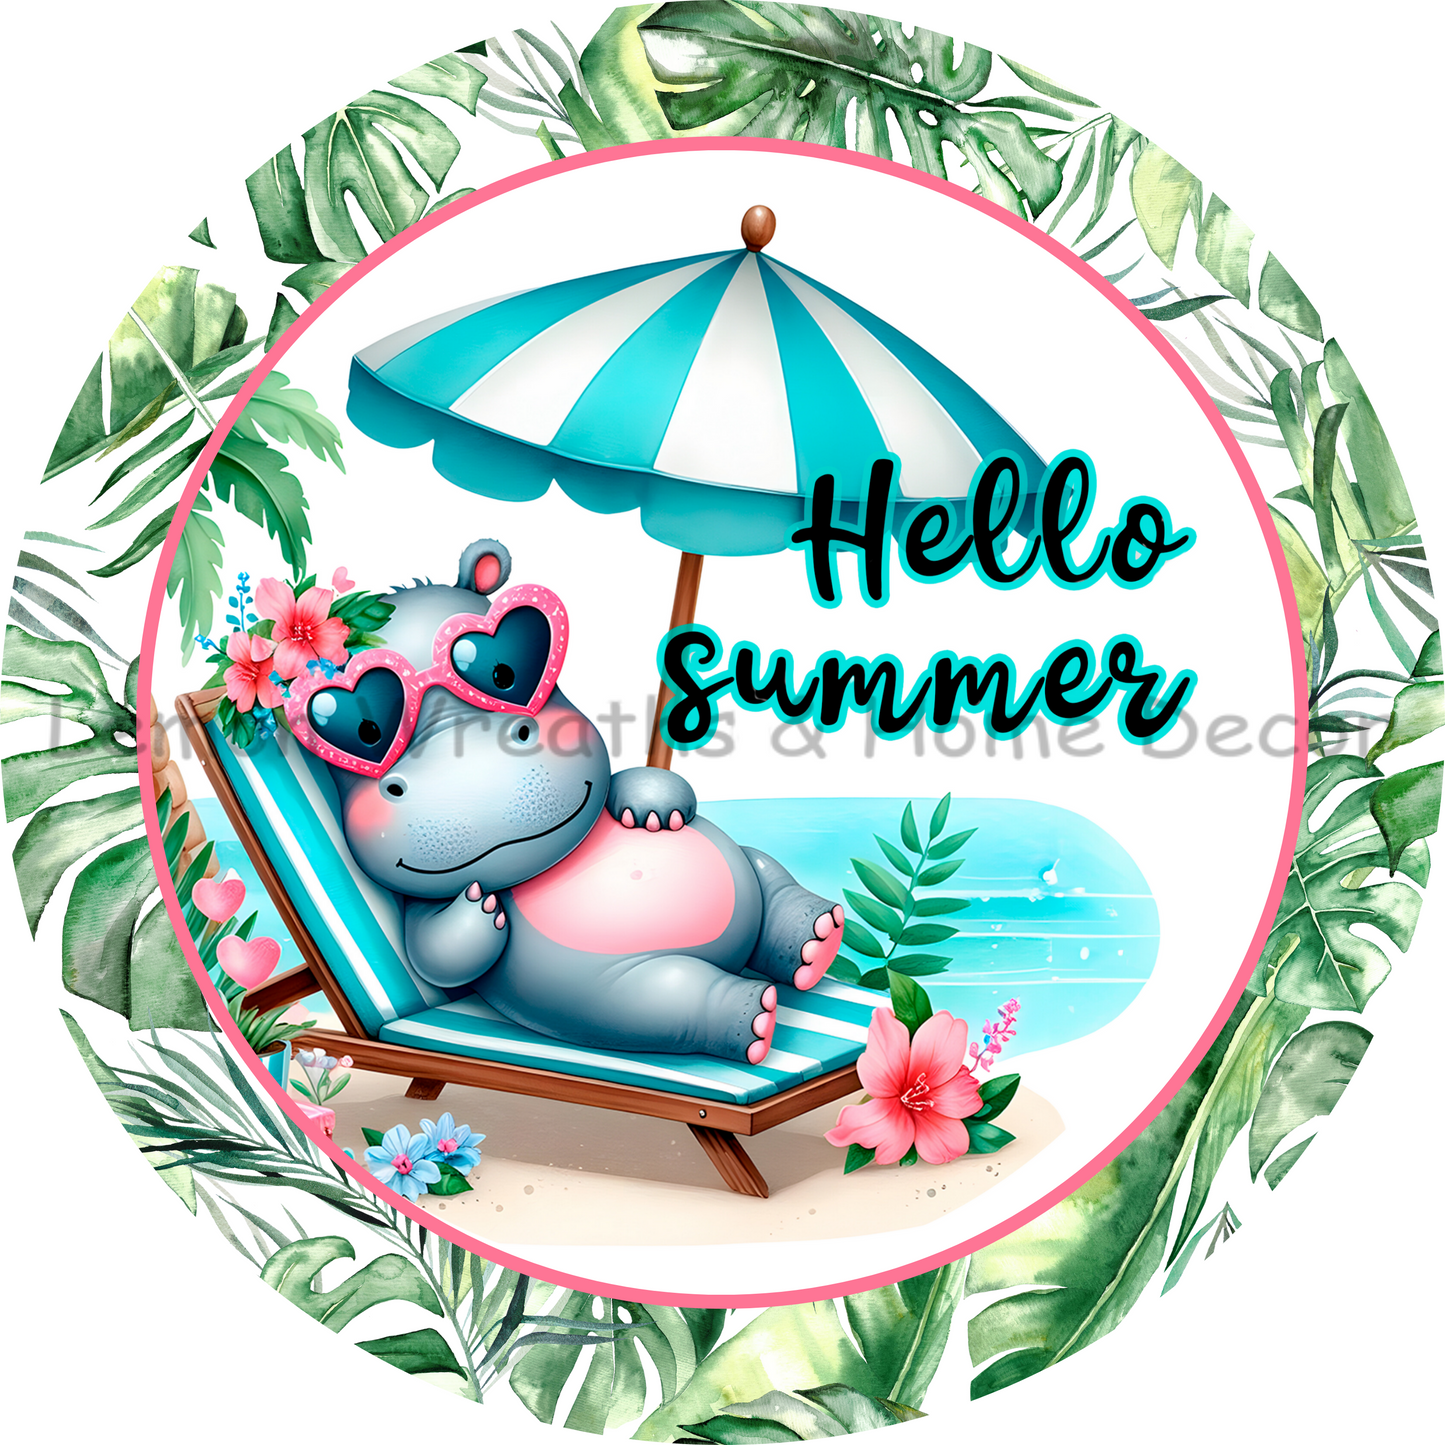 Hello Summer Hippo Sunbathing Metal Sign